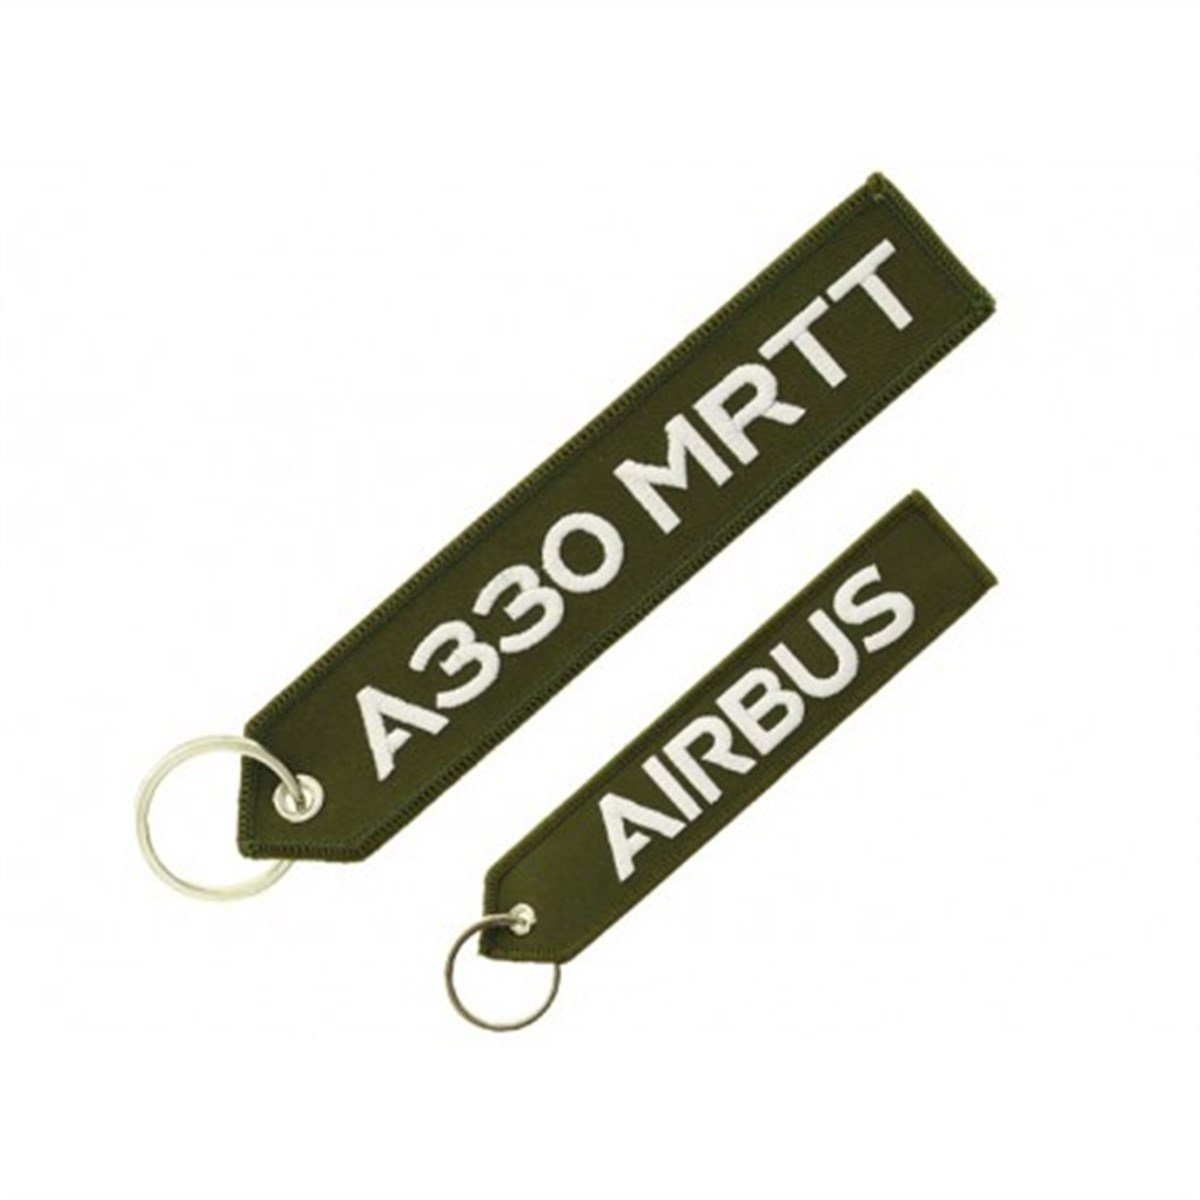 A330 Mrtt Koyu Yeşil Airbus Anahtarlık Anahtarlık